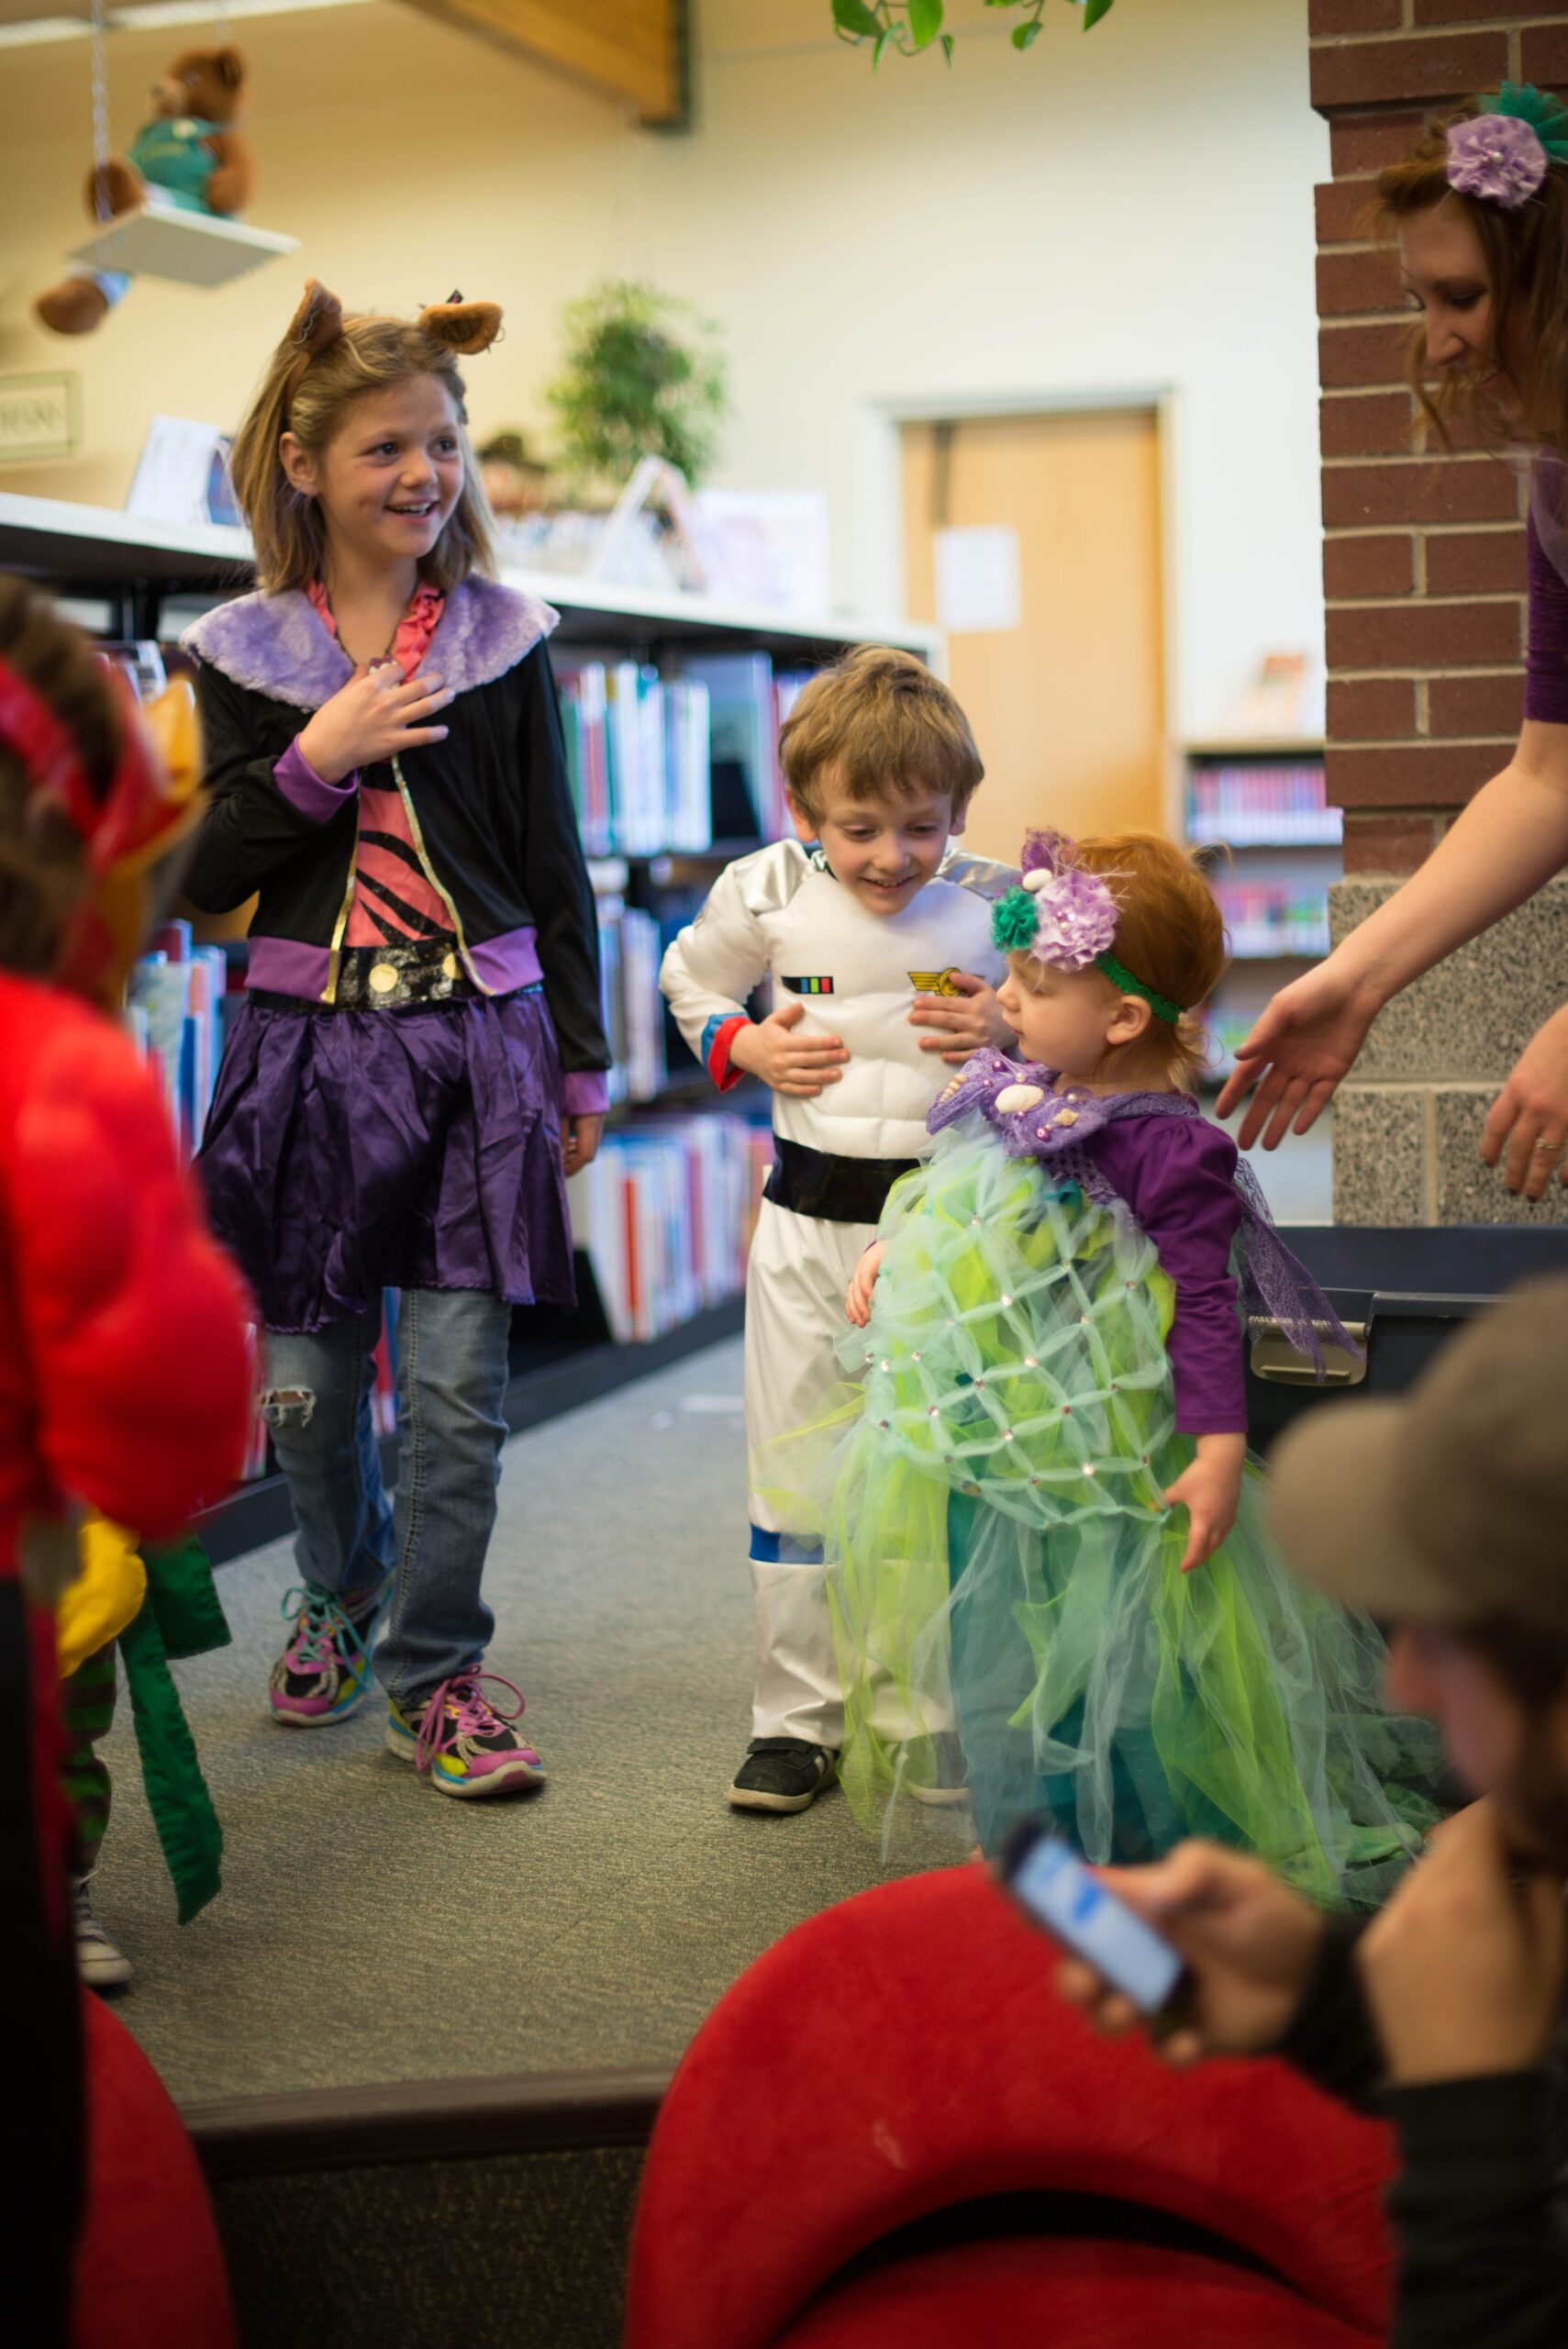 children in different costume standing inside room